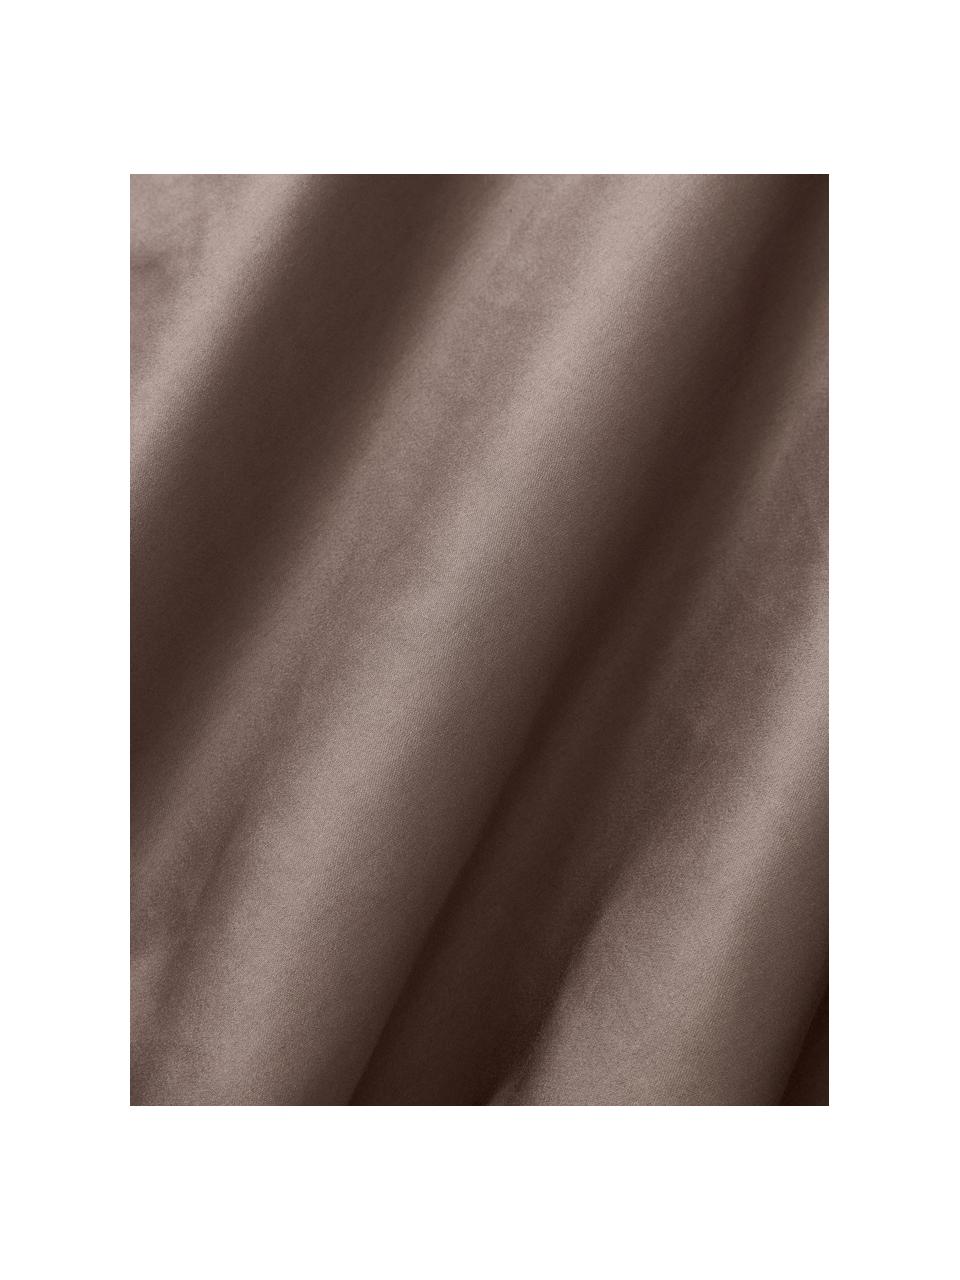 Sábana bajera cubrecolchón de satén Comfort, Marrón oscuro, Cama 90 cm (90 x 200 x 15 cm)